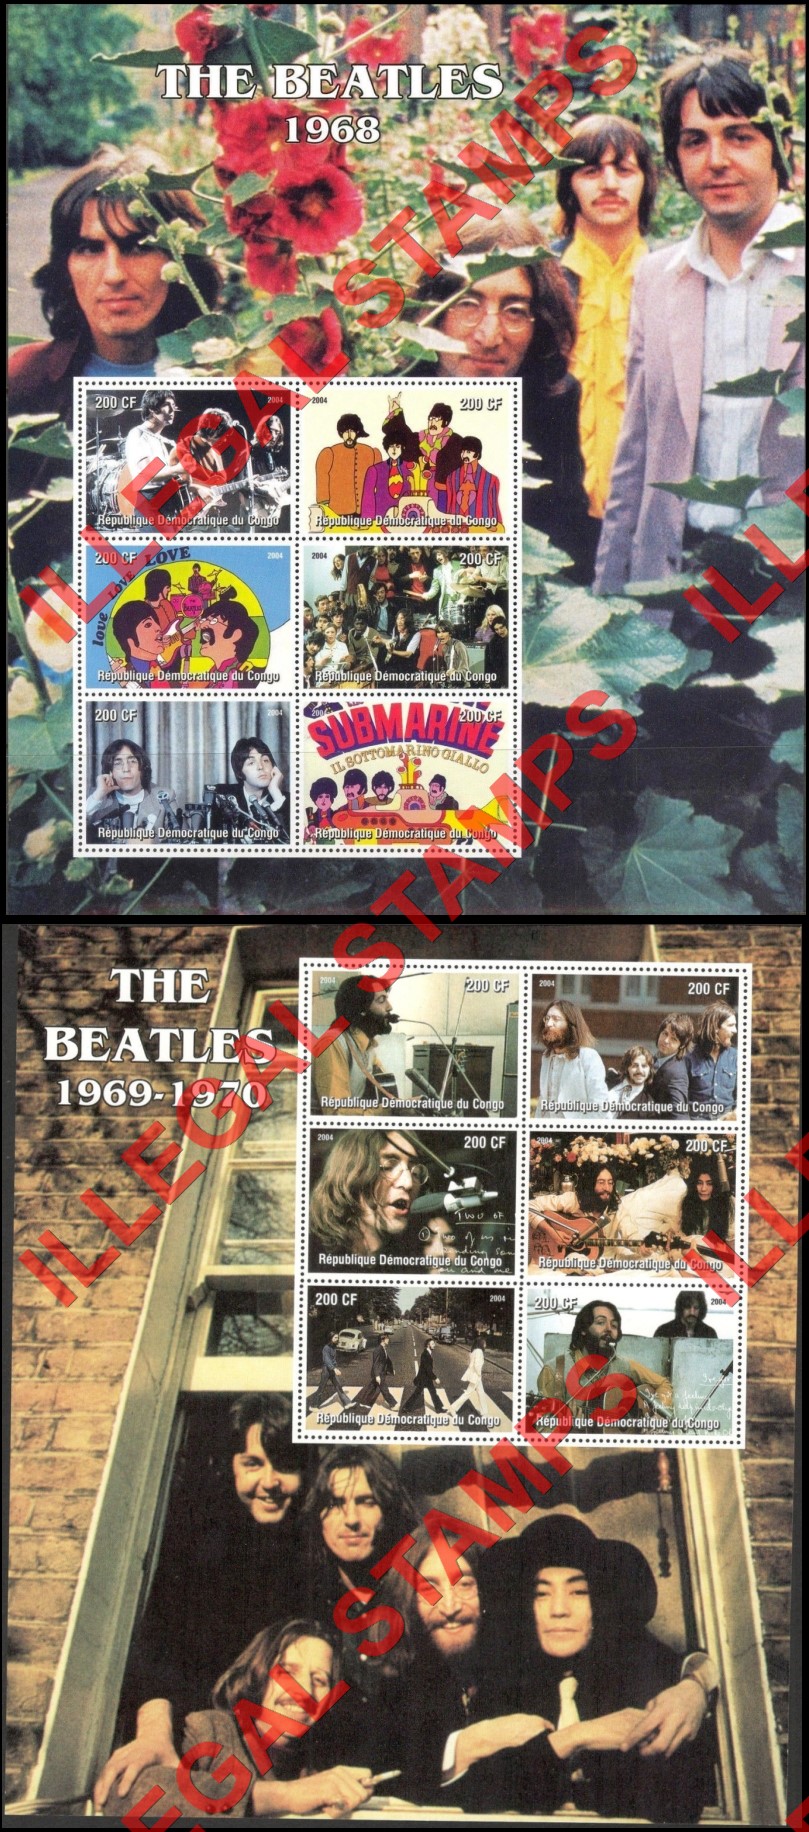 Congo Democratic Republic 2004 The Beatles Illegal Stamp Souvenir Sheets of 6 (Part 4)